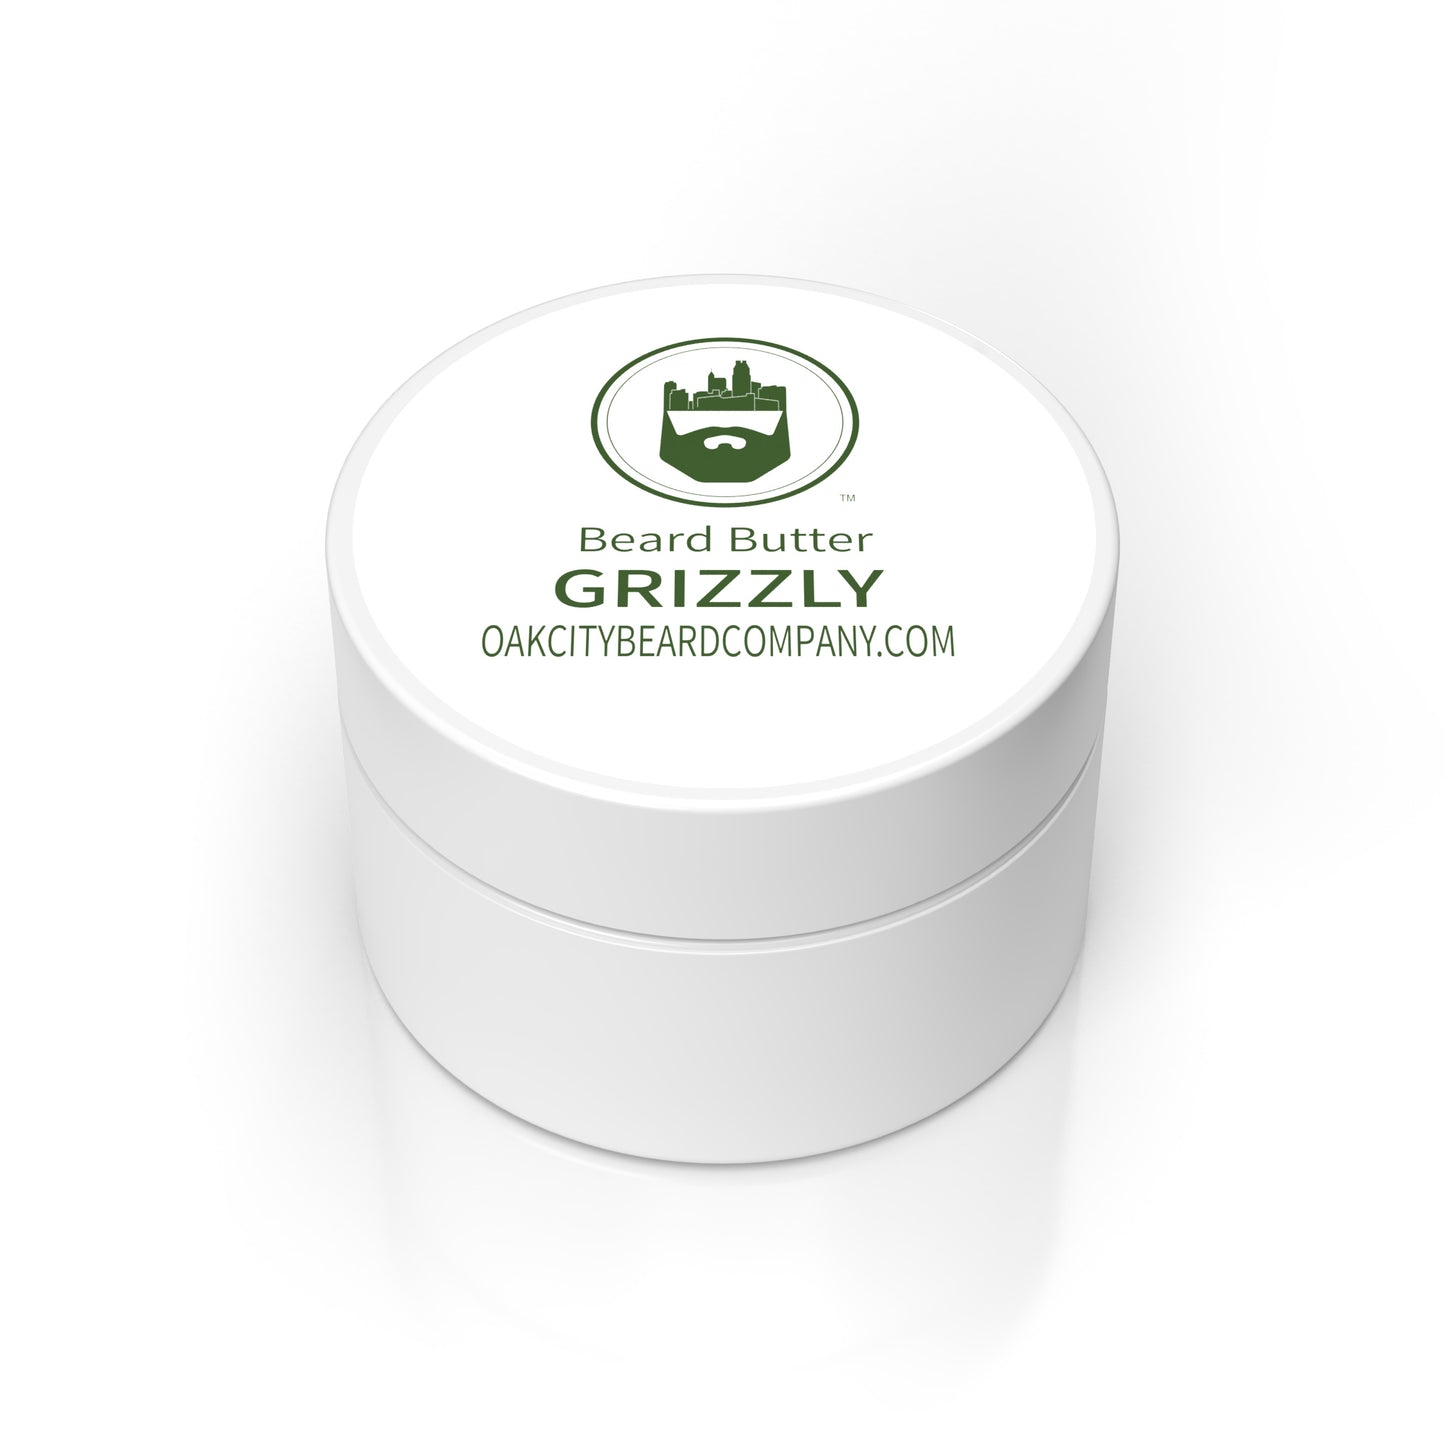 Grizzly (Beard Butter) by Oak City Beard Companyi